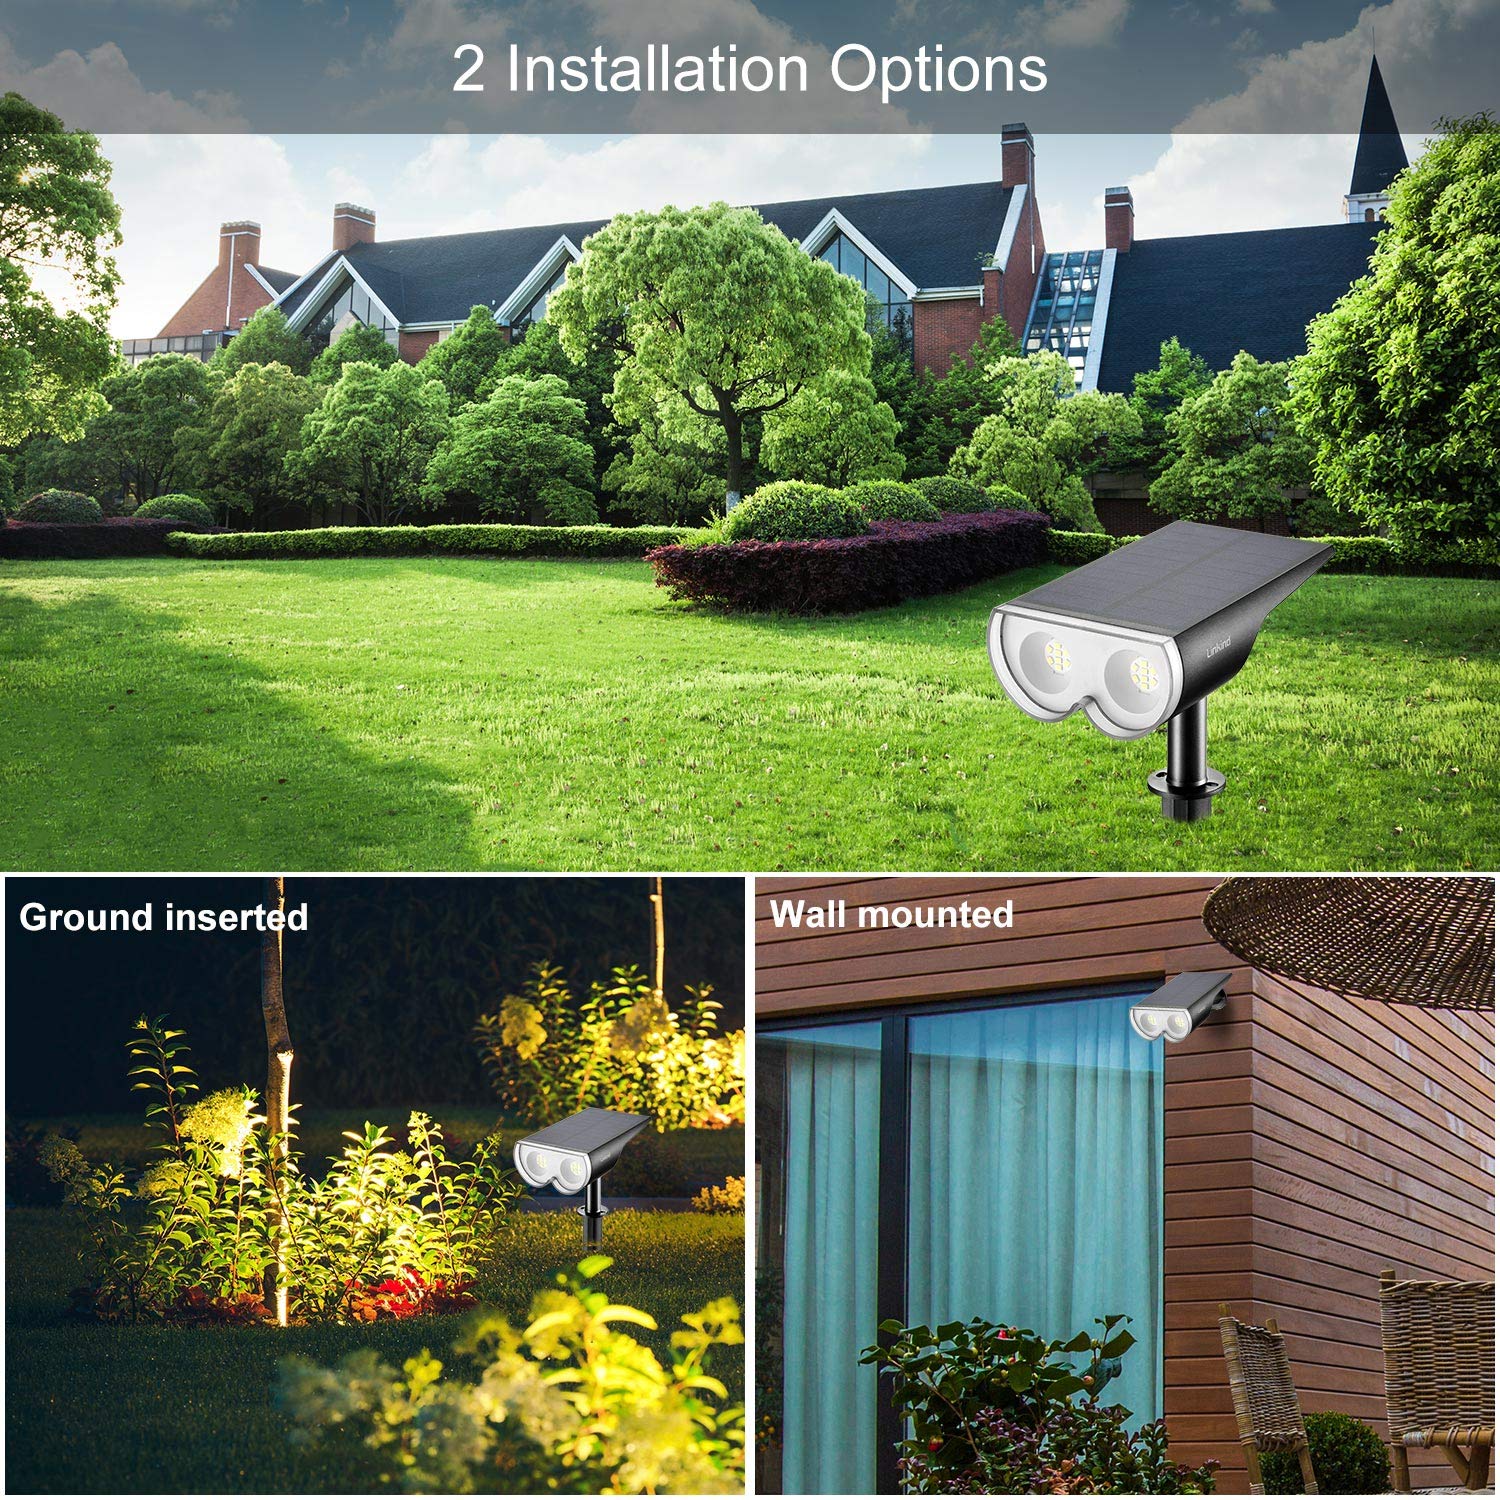 Linkind StarRay Solar Spot Lights Outdoor, 16 LEDs IP67 Waterproof Dusk-to-Dawn Landscape Spotlights, 6500K Daylight Wall Lights for Garden Yard Driveway Walkway, 4 Pack